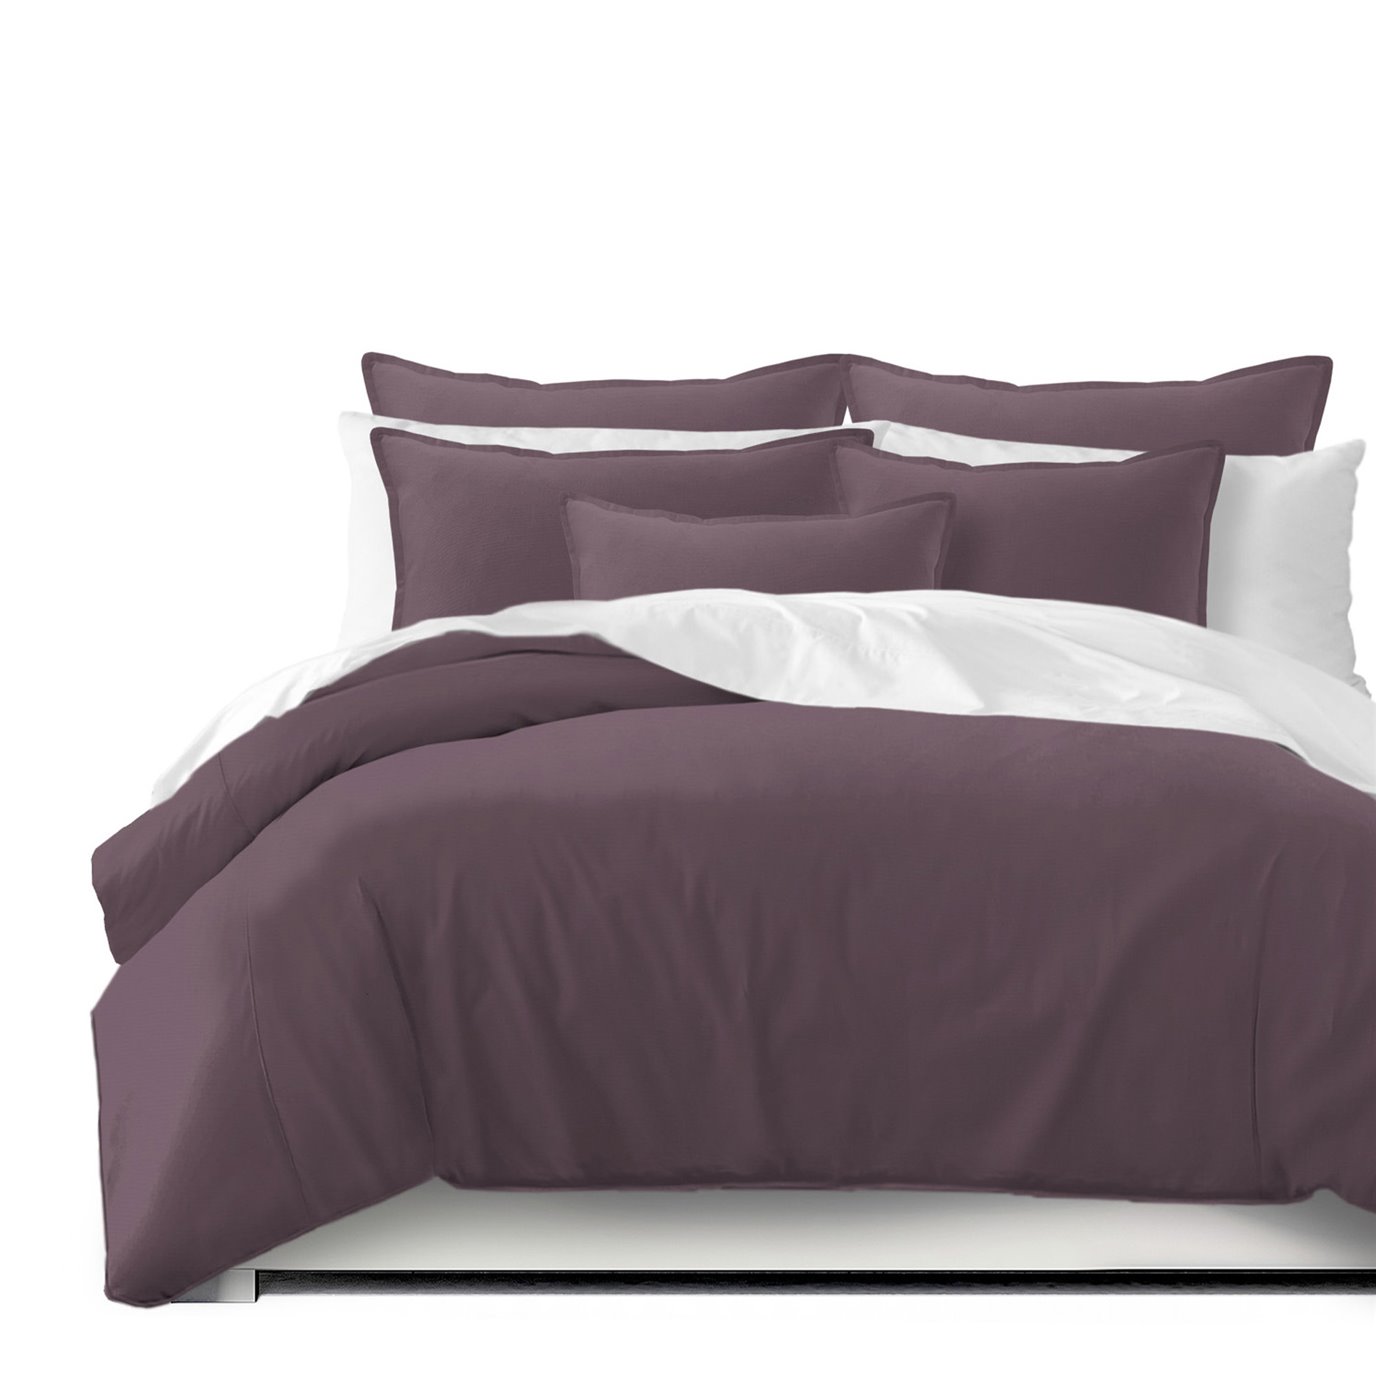 Braxton Purple Grape Coverlet and Pillow Sham(s) Set - Size Full